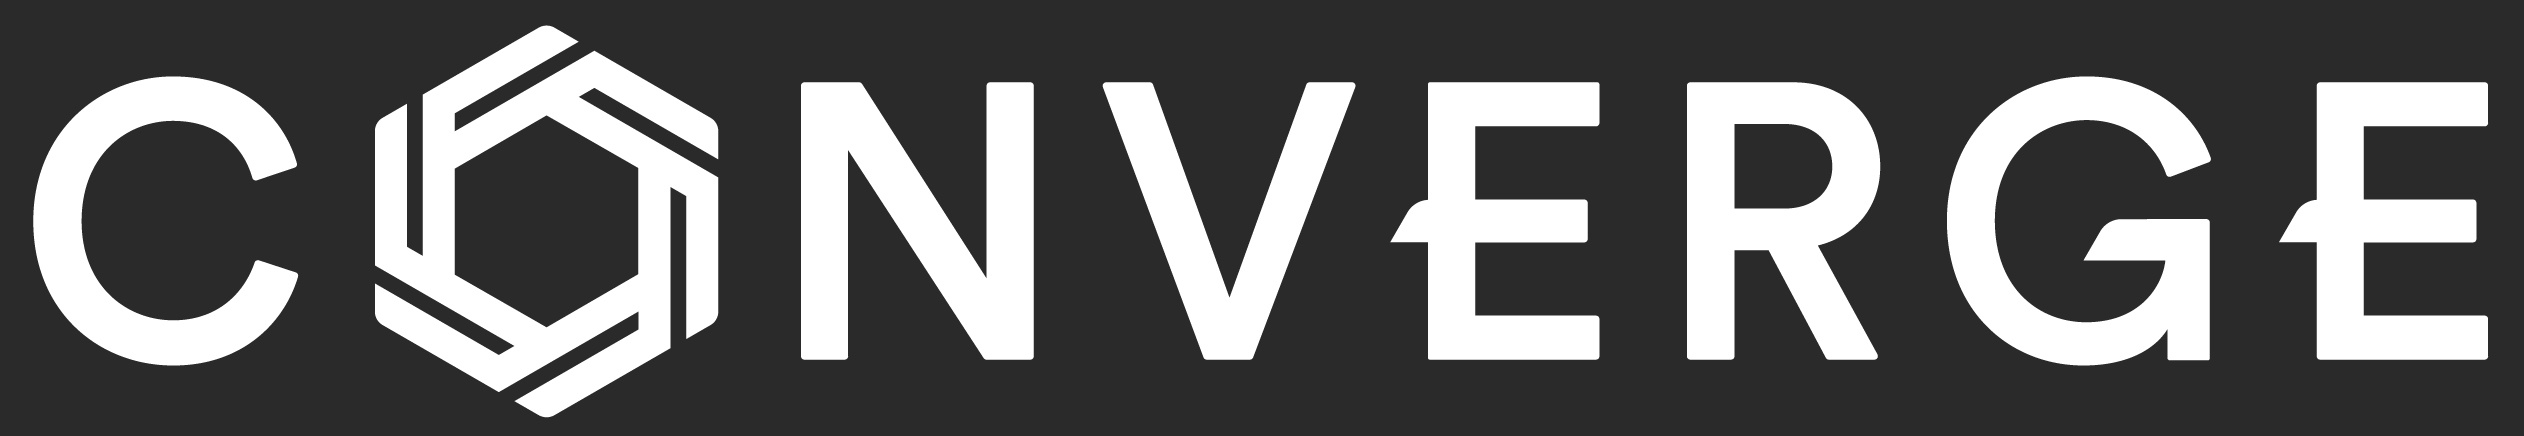 ConvergeVP-Logotype-Knockout-0217